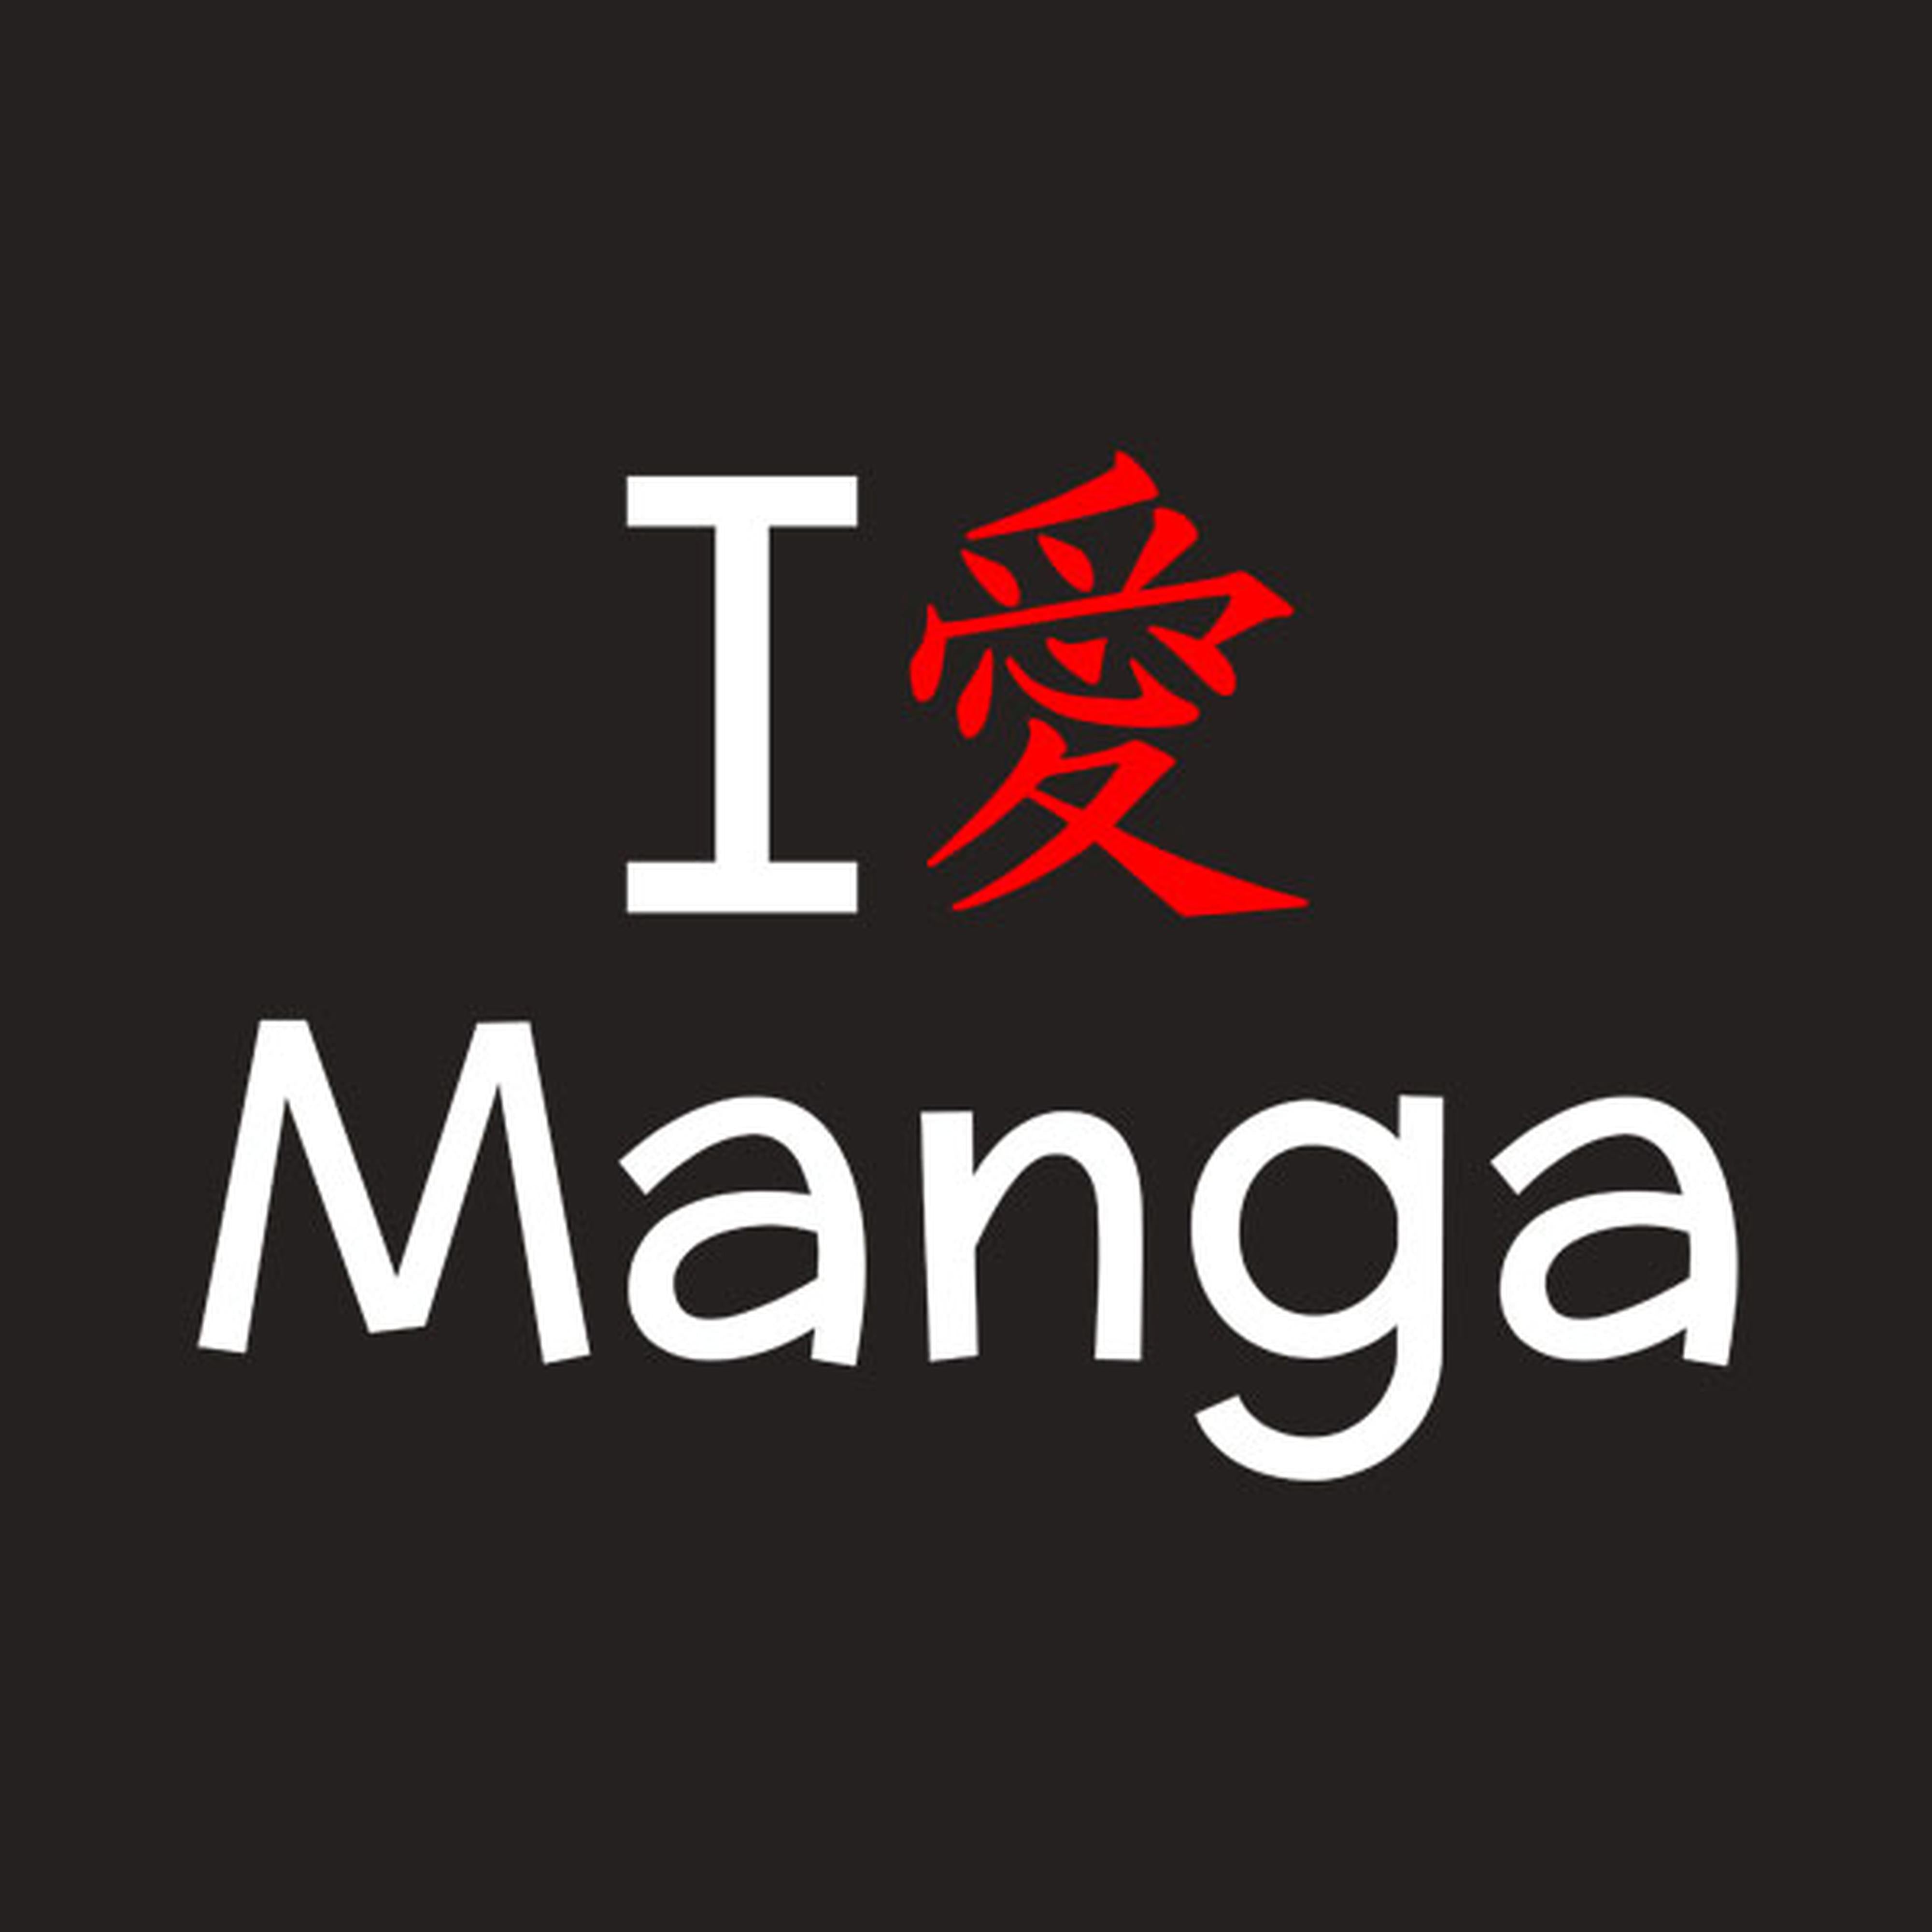 I love Manga